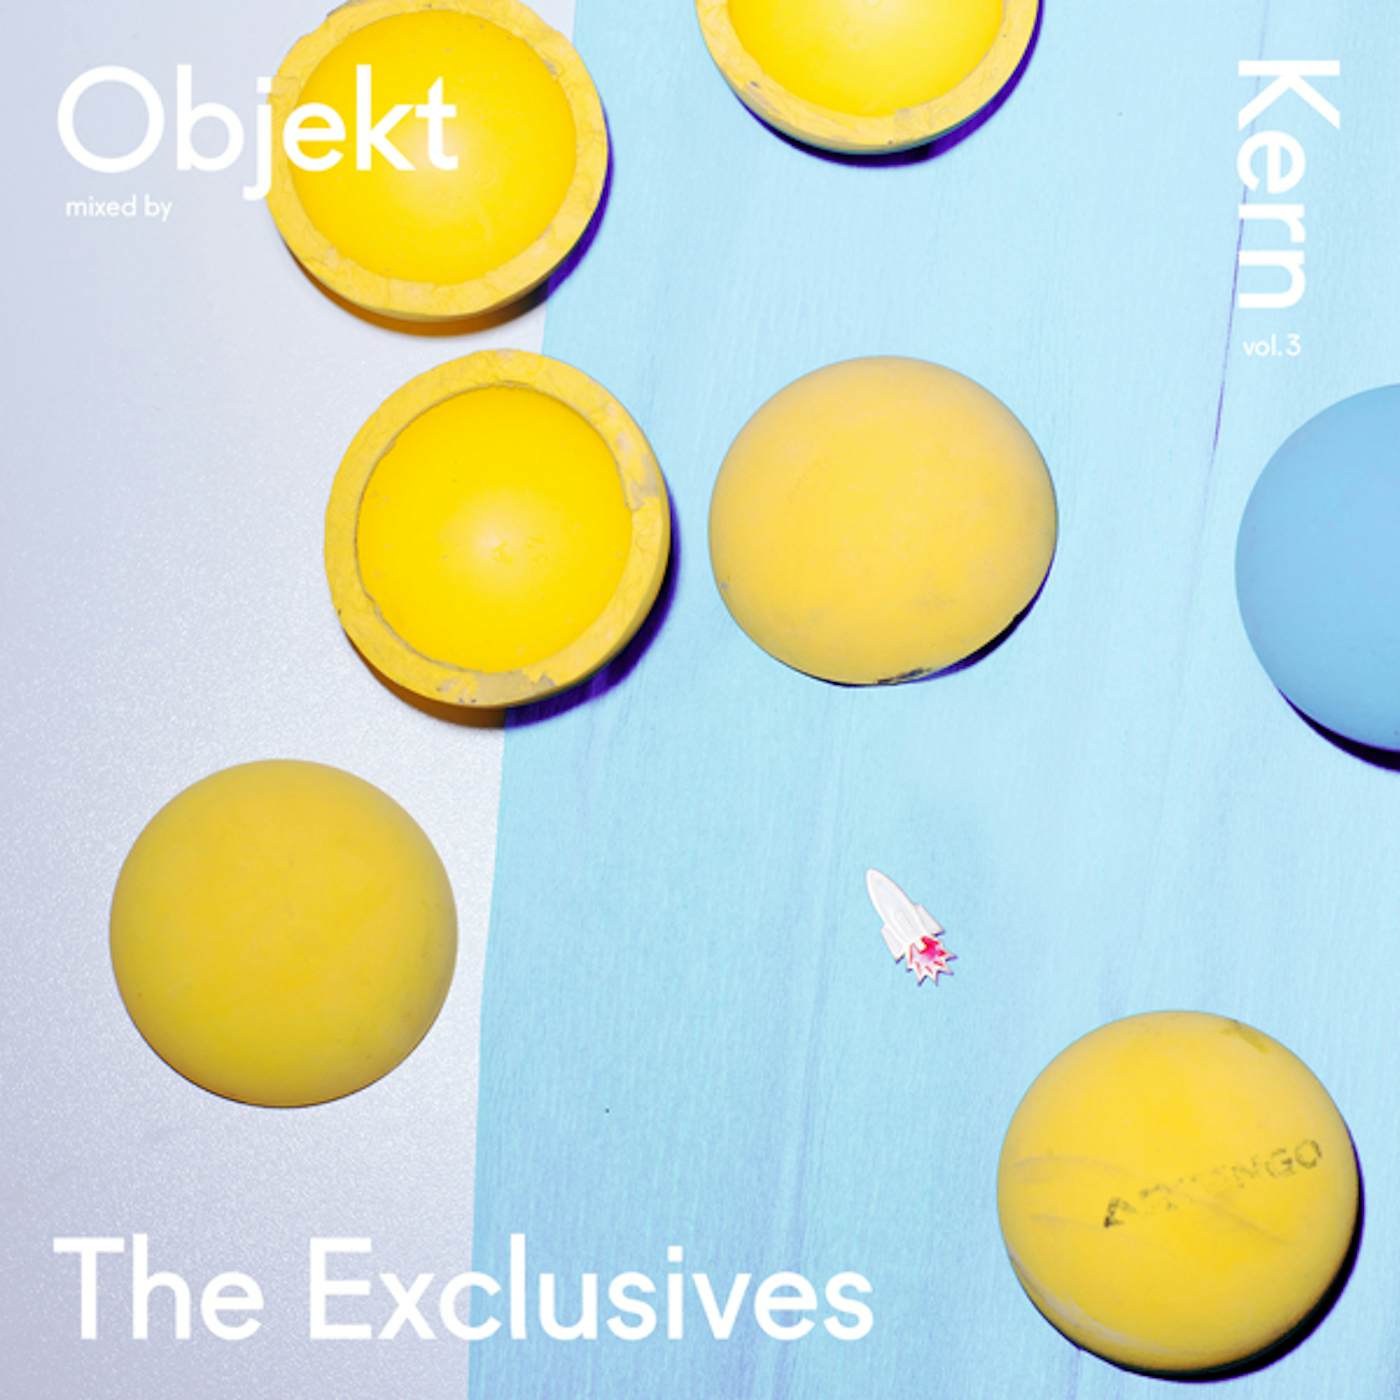 Objekt KERN 3 - EXCLUSIVES Vinyl Record